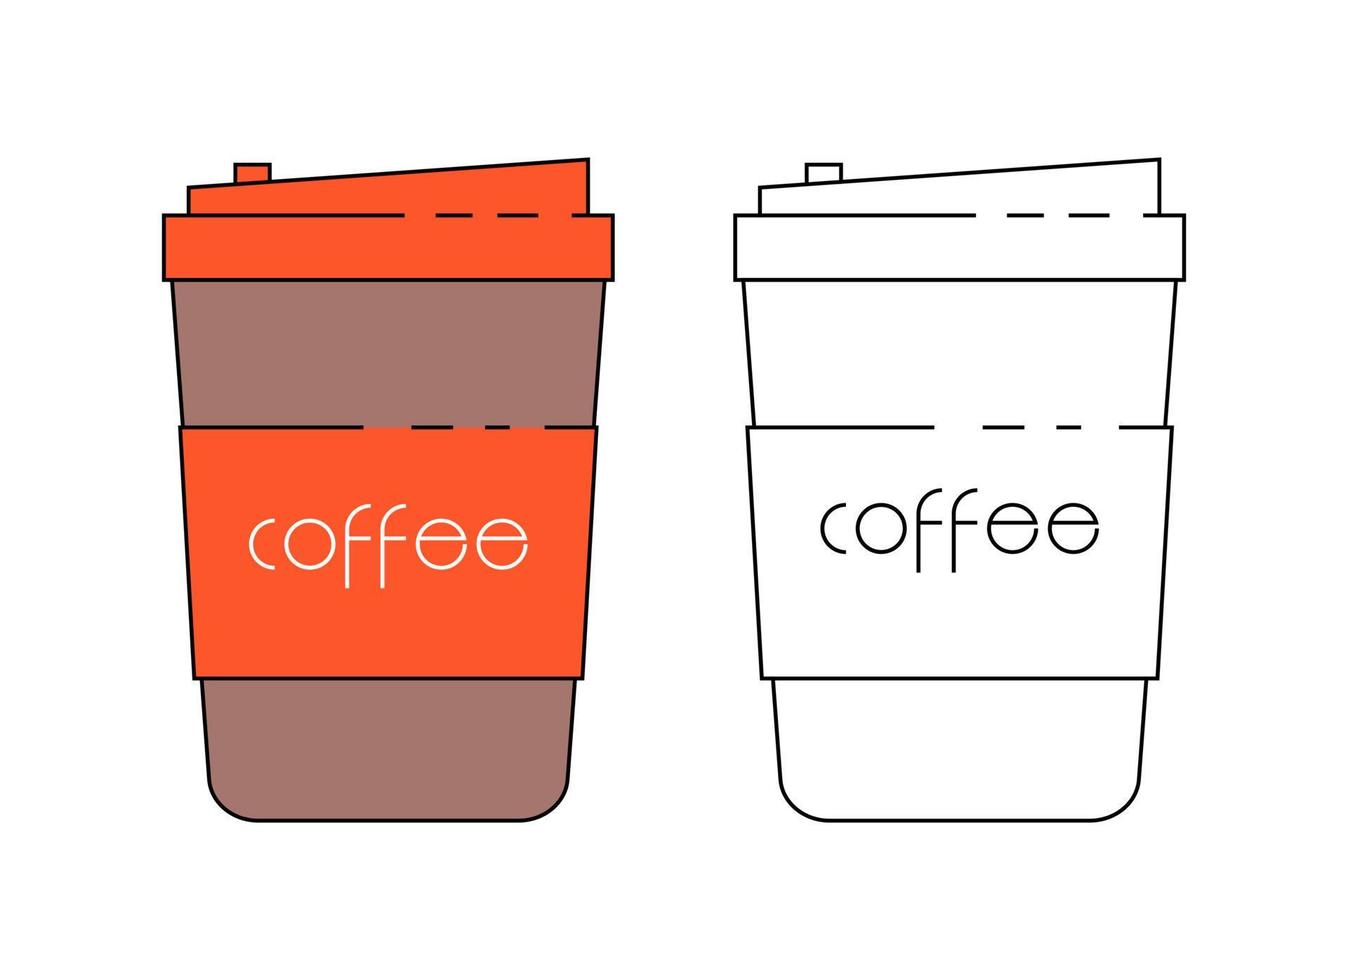 carta tazza. tazze per caldo caffè e tè. contenitore bevanda per bar, caffè o tè caldo illustrazione. vettore eps10